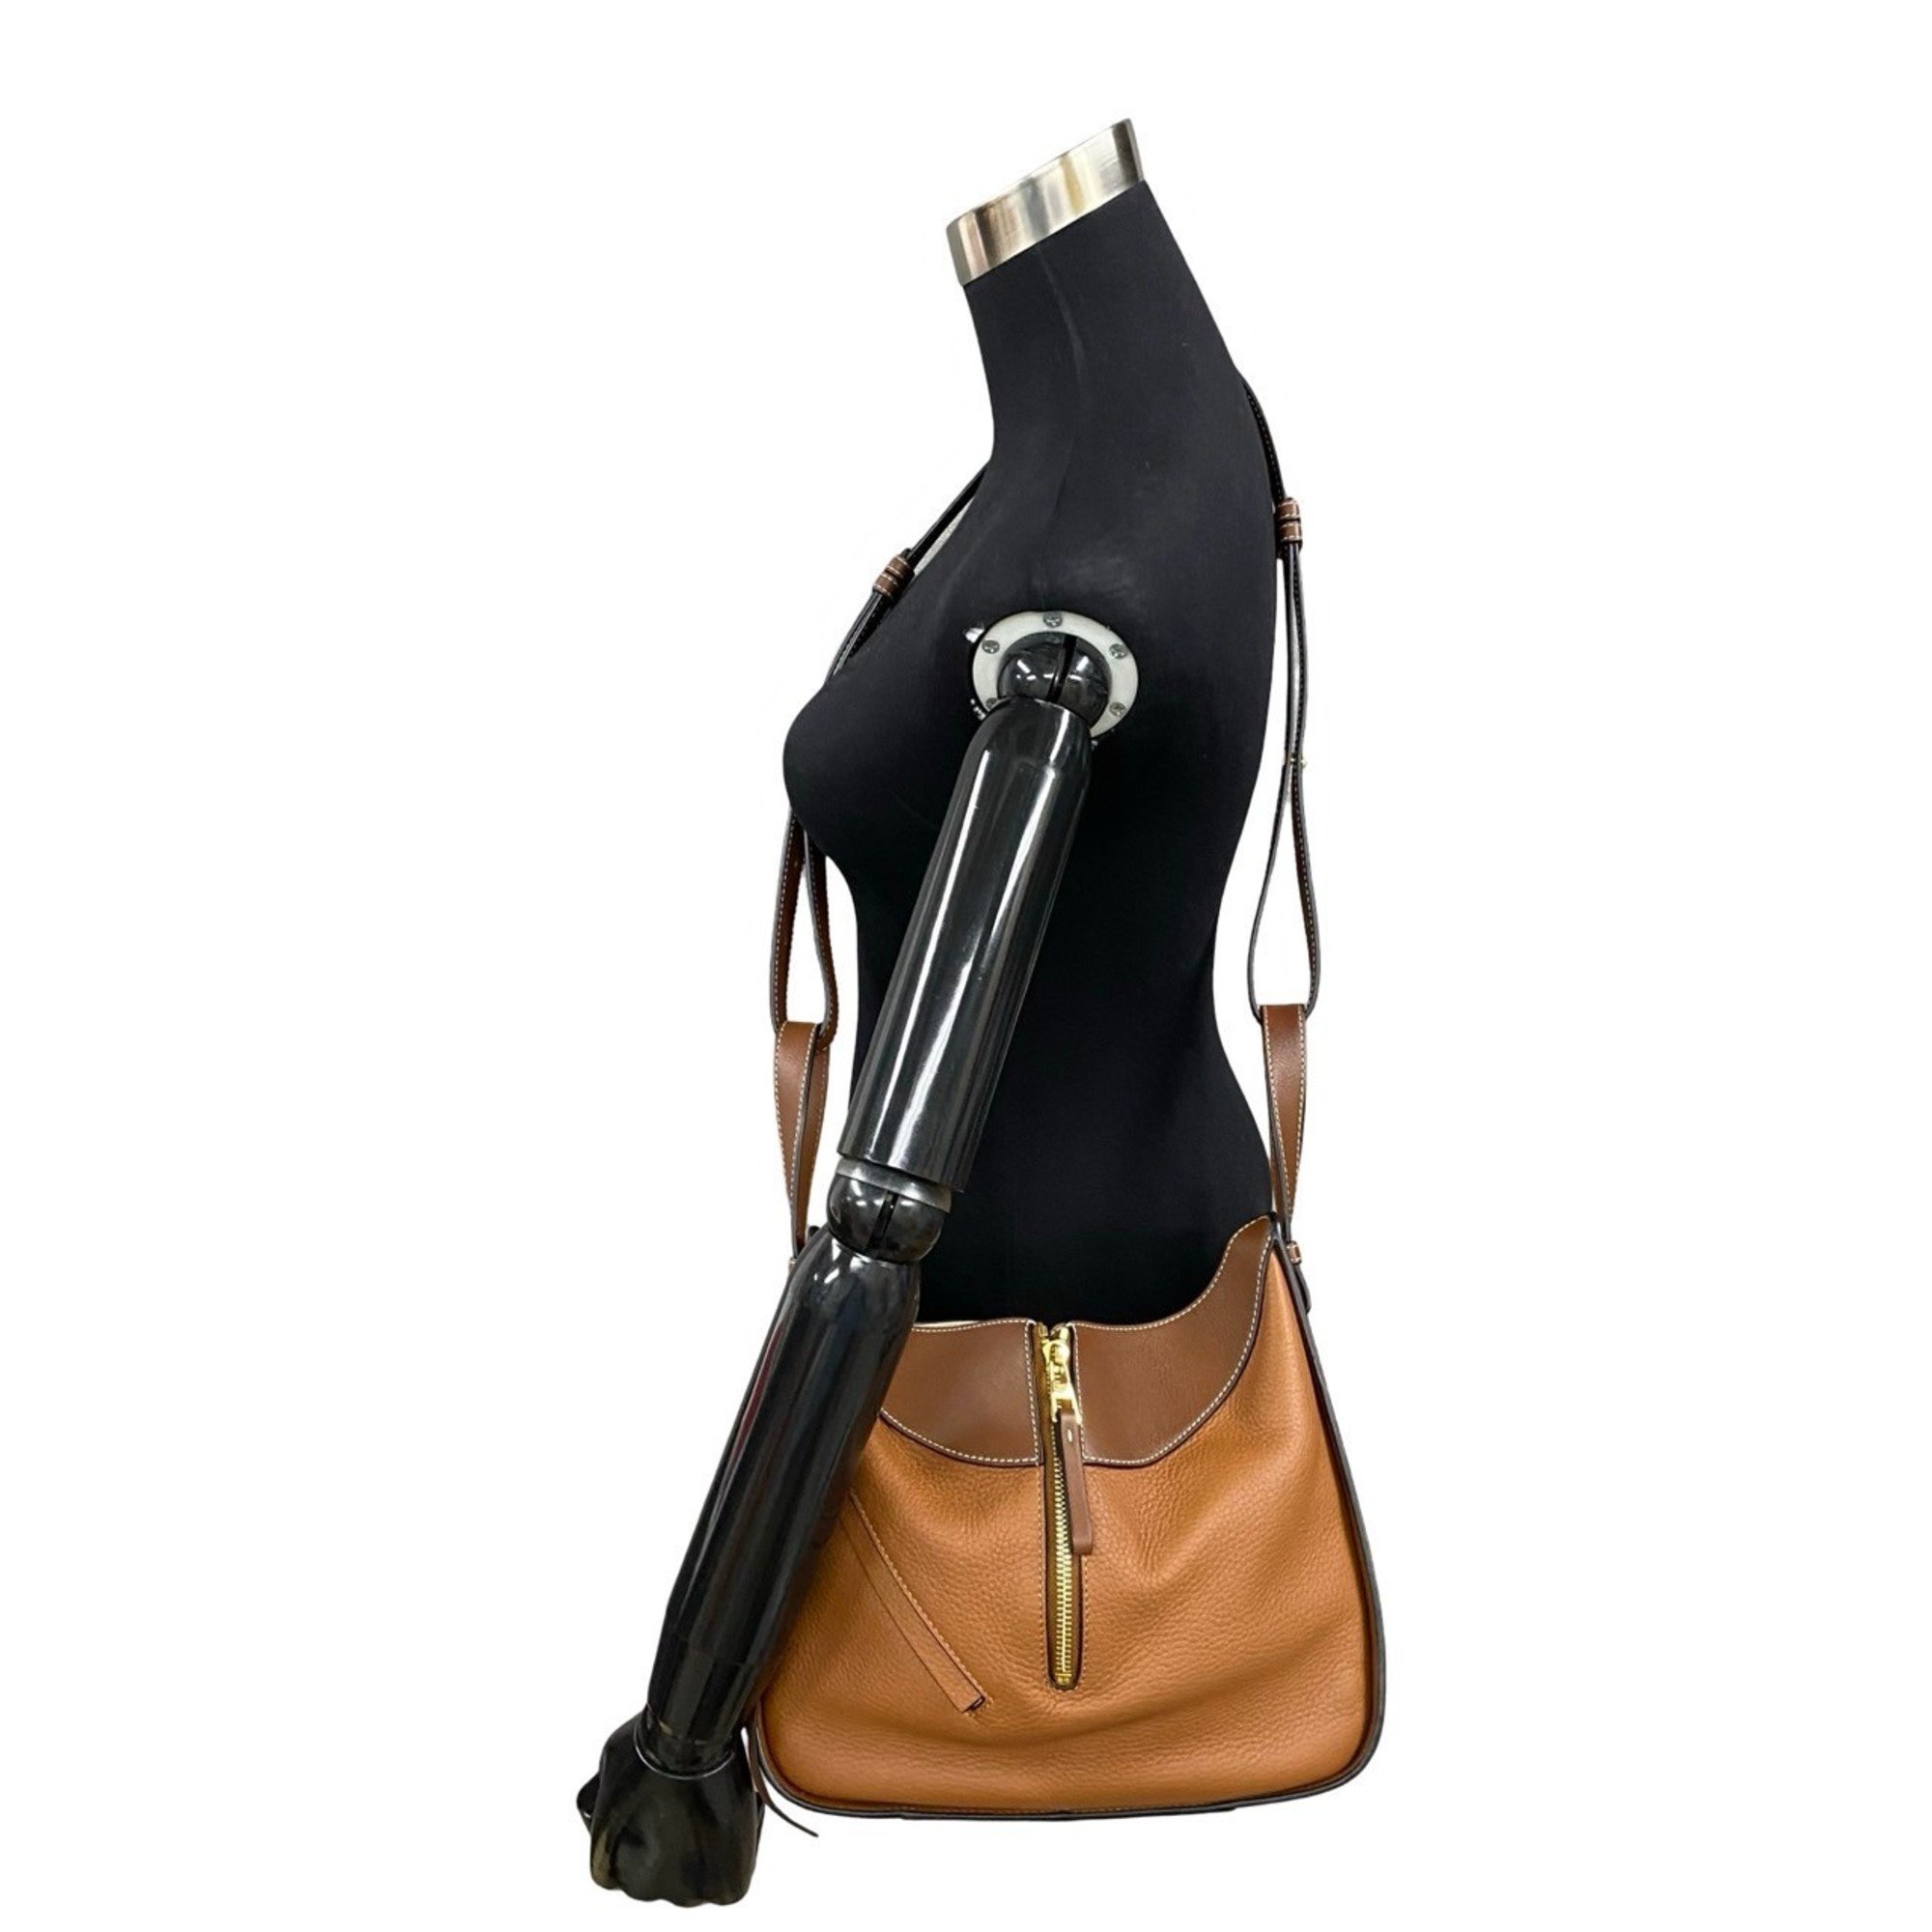 LOEWE Hammock Small Anagram Leather Shoulder Bag Handbag Brown 17965